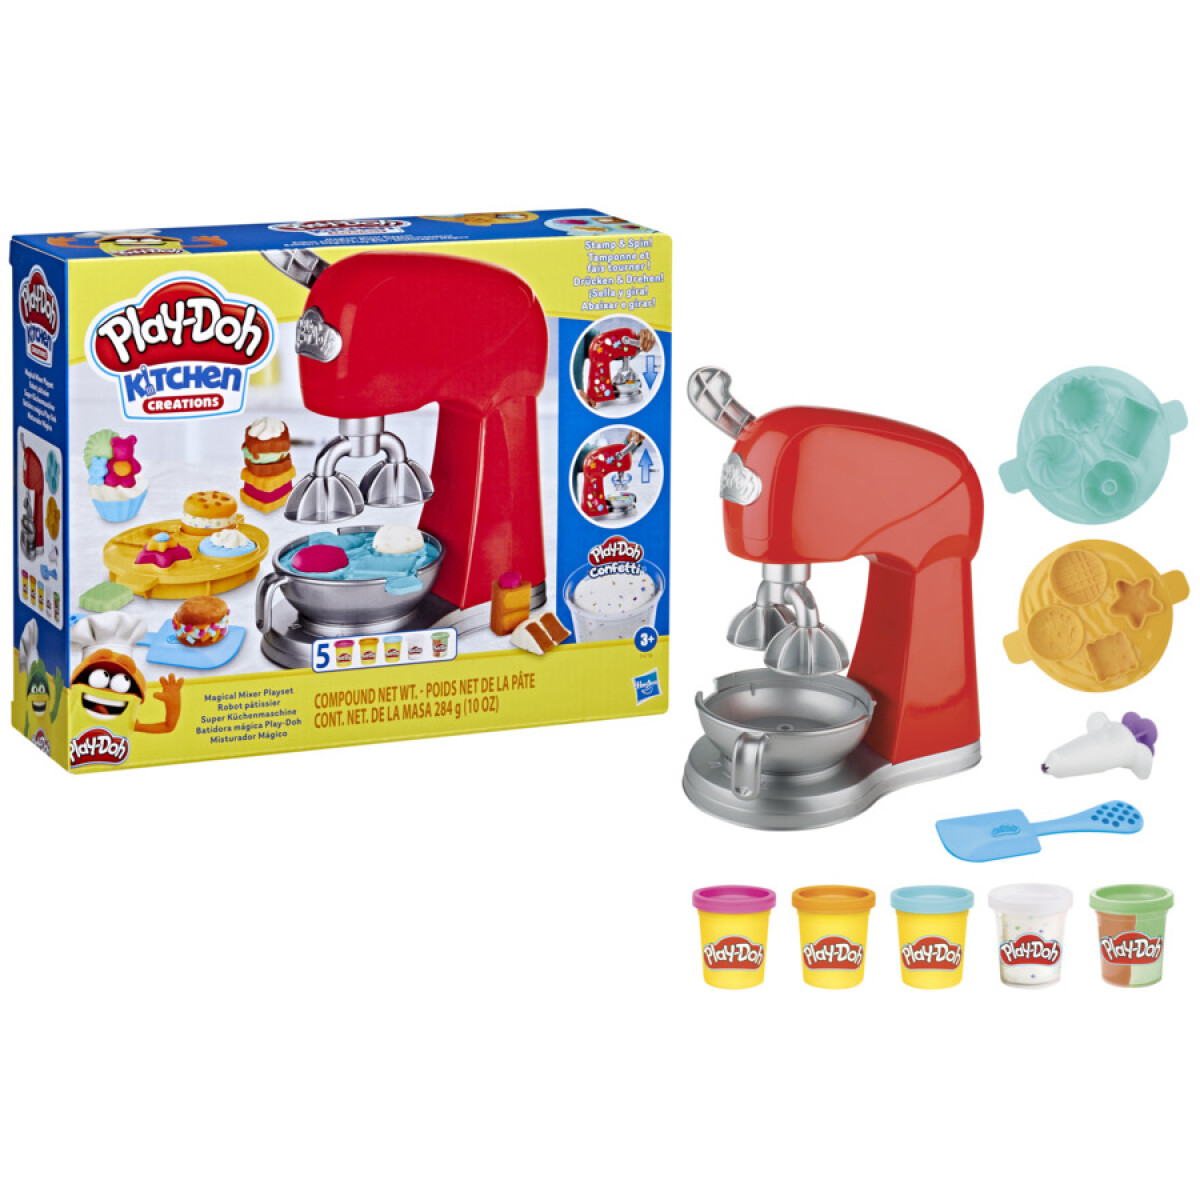 Set de Cocina Play-doh Kitchen Creations Batidora Mágica - 001 